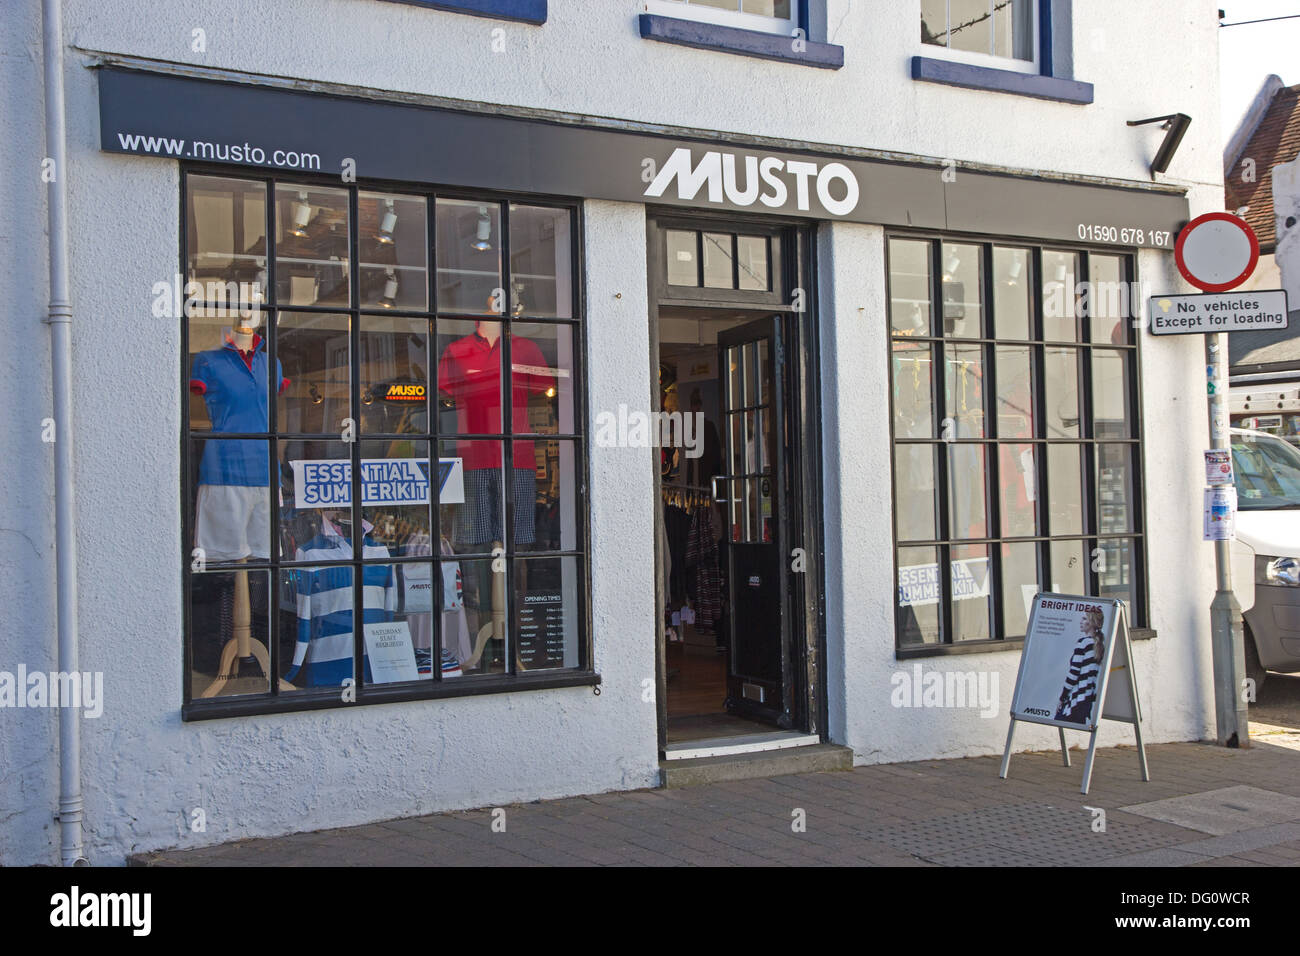 Musto clothing shop Stock Photo